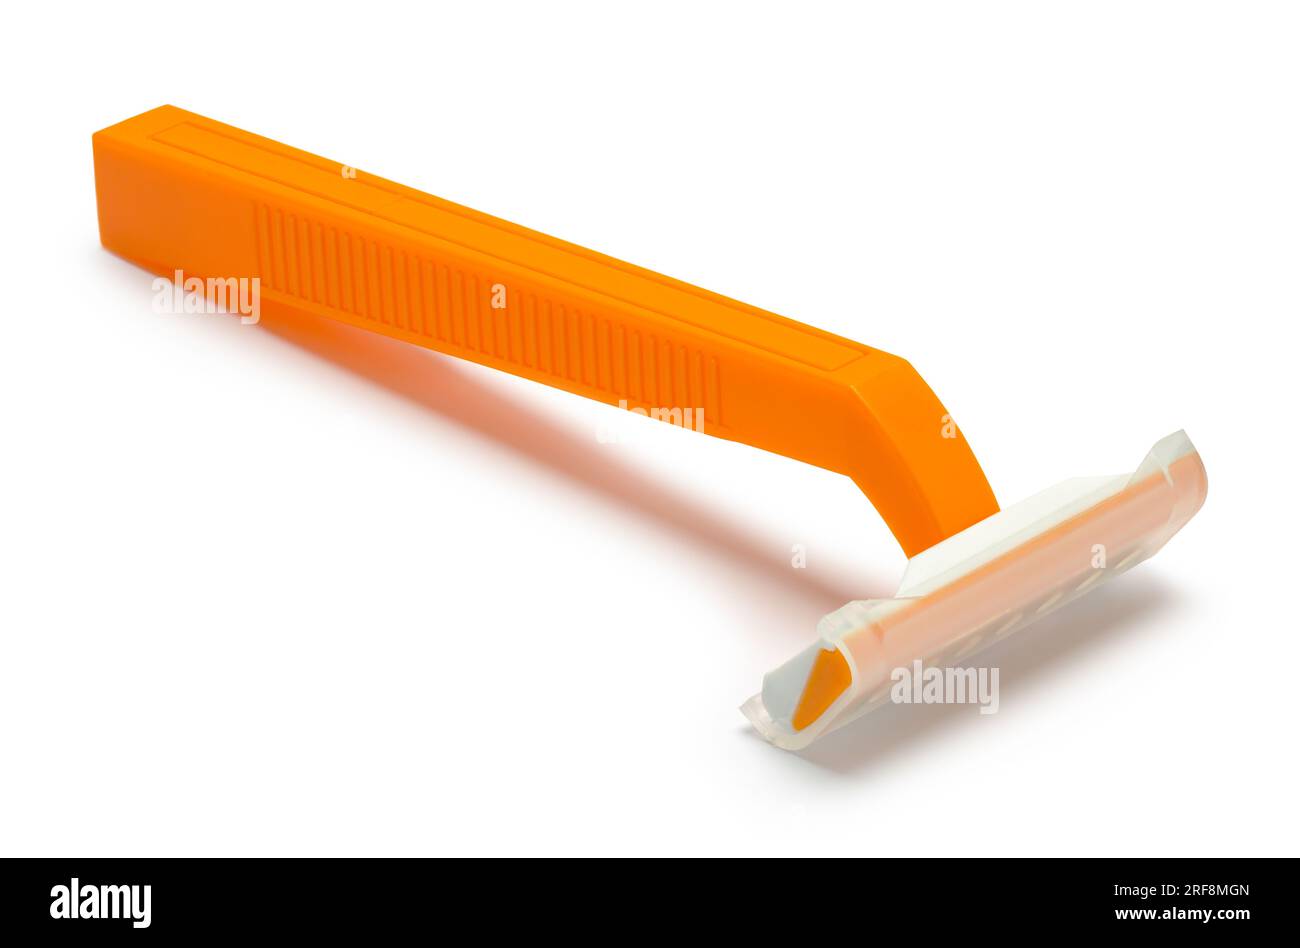 Disposable Orange Shaving Razor Cut Out on White. Stock Photo